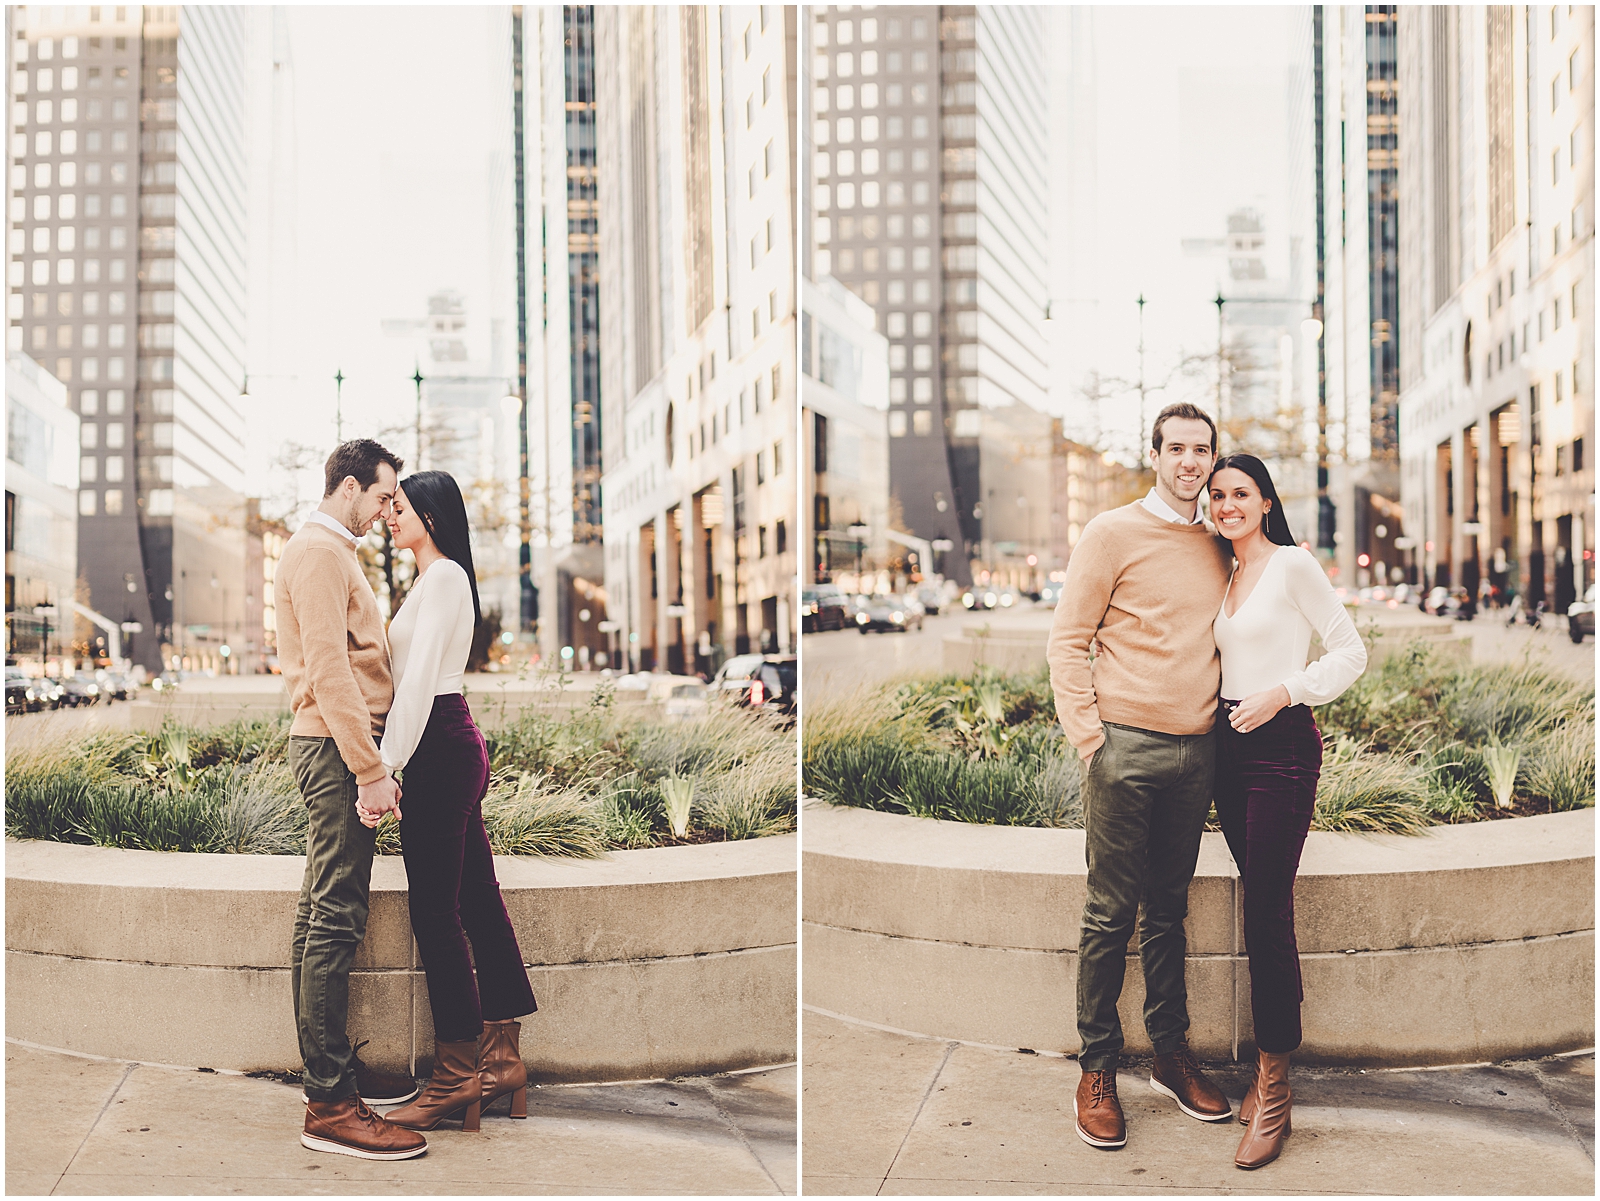 Delaney and Corey's Lyric Opera engagement photos in Chicago with Chicagoland wedding photographer Kara Evans Photographer.